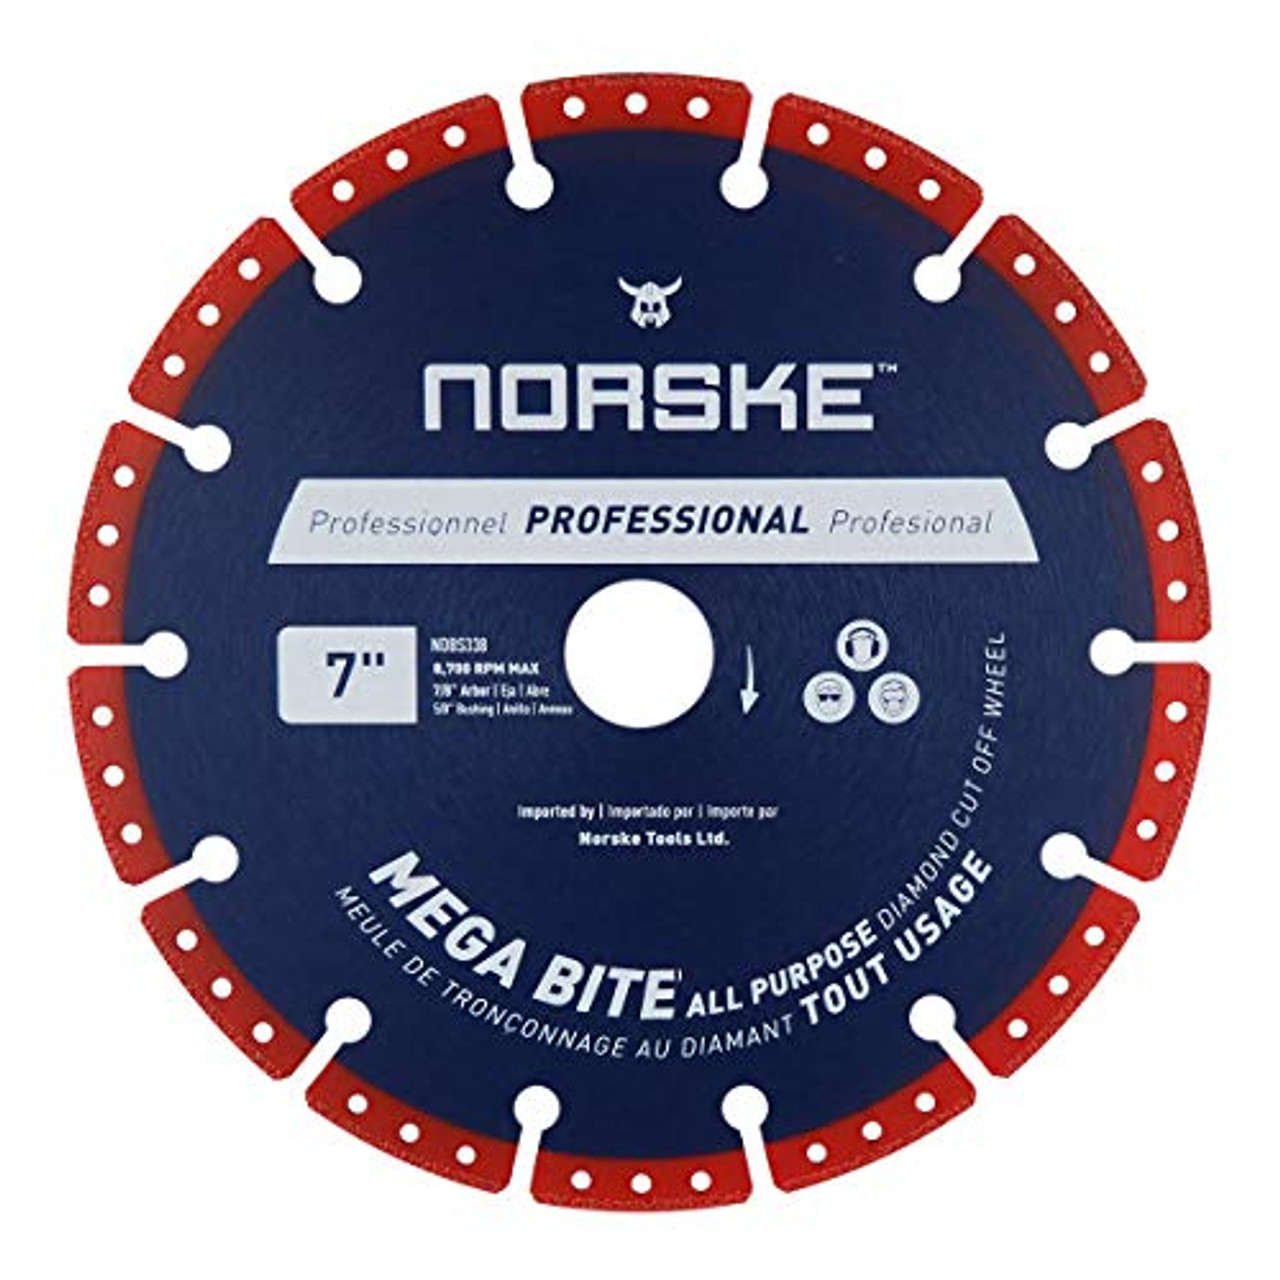 Norske NDBS338 Mega Bite Diamond Vacuum Brazed Cutoff Wheel, 7"